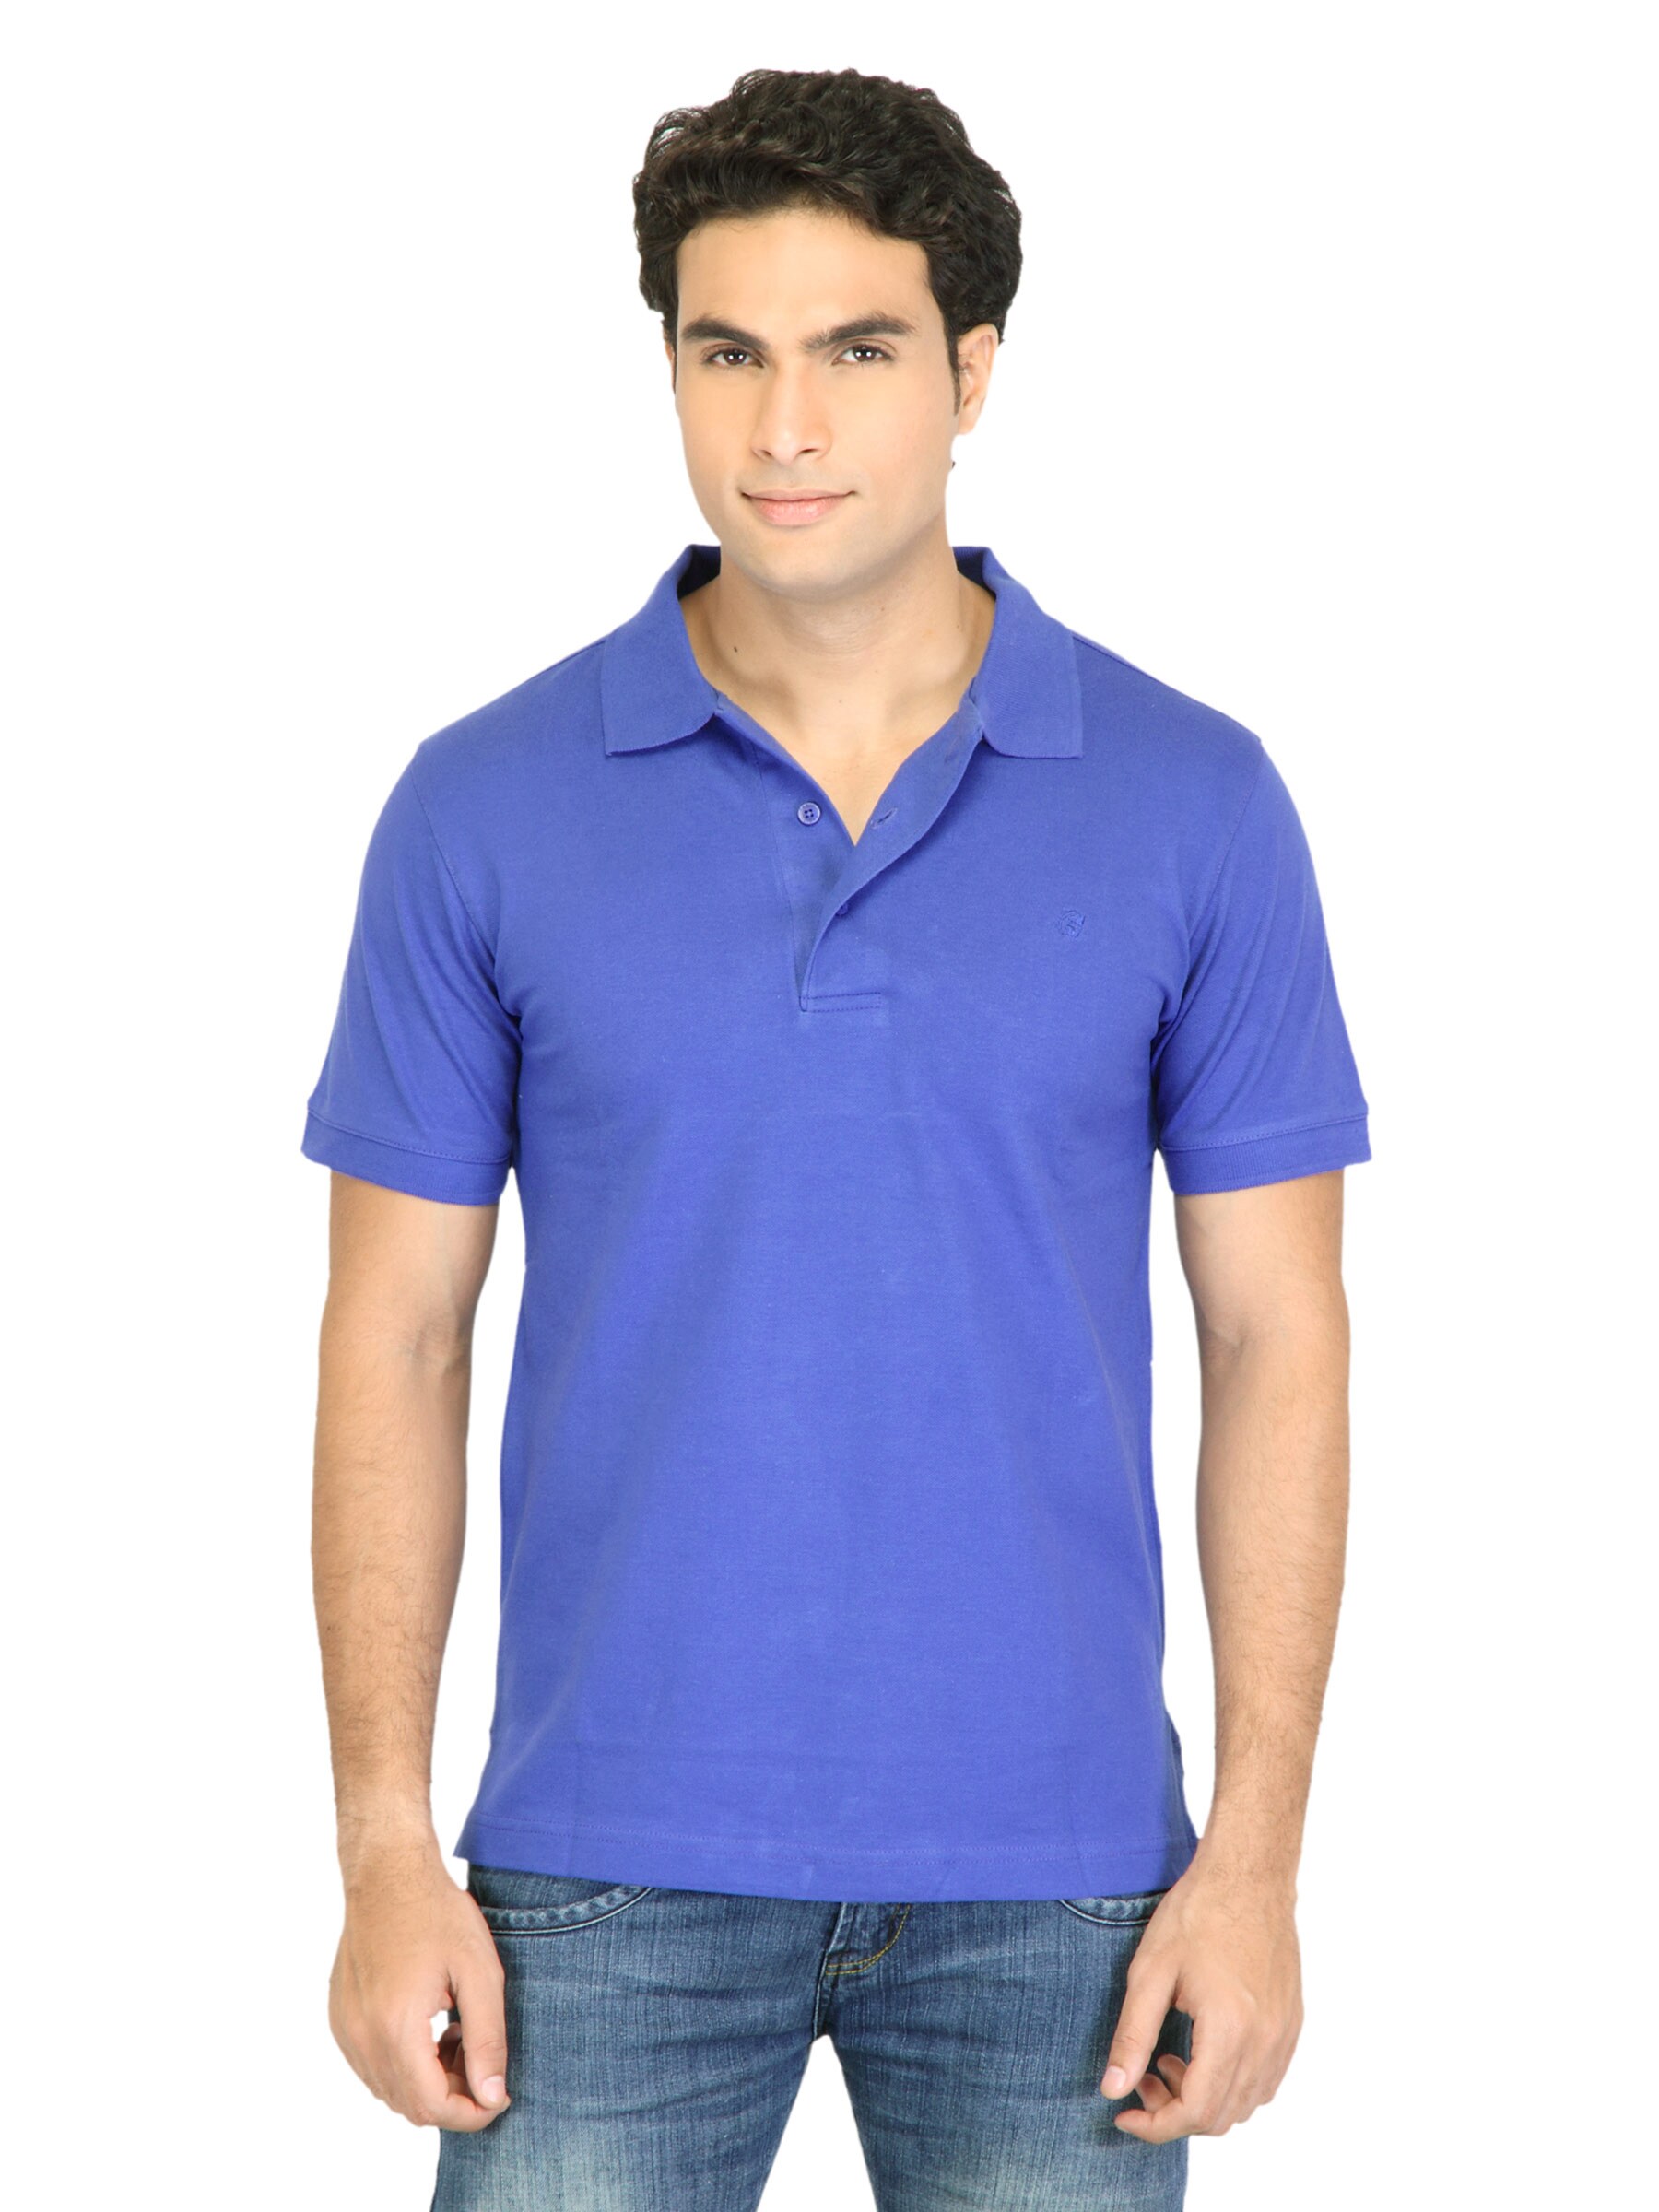 Facit Men Polo Tee Blue Tshirt